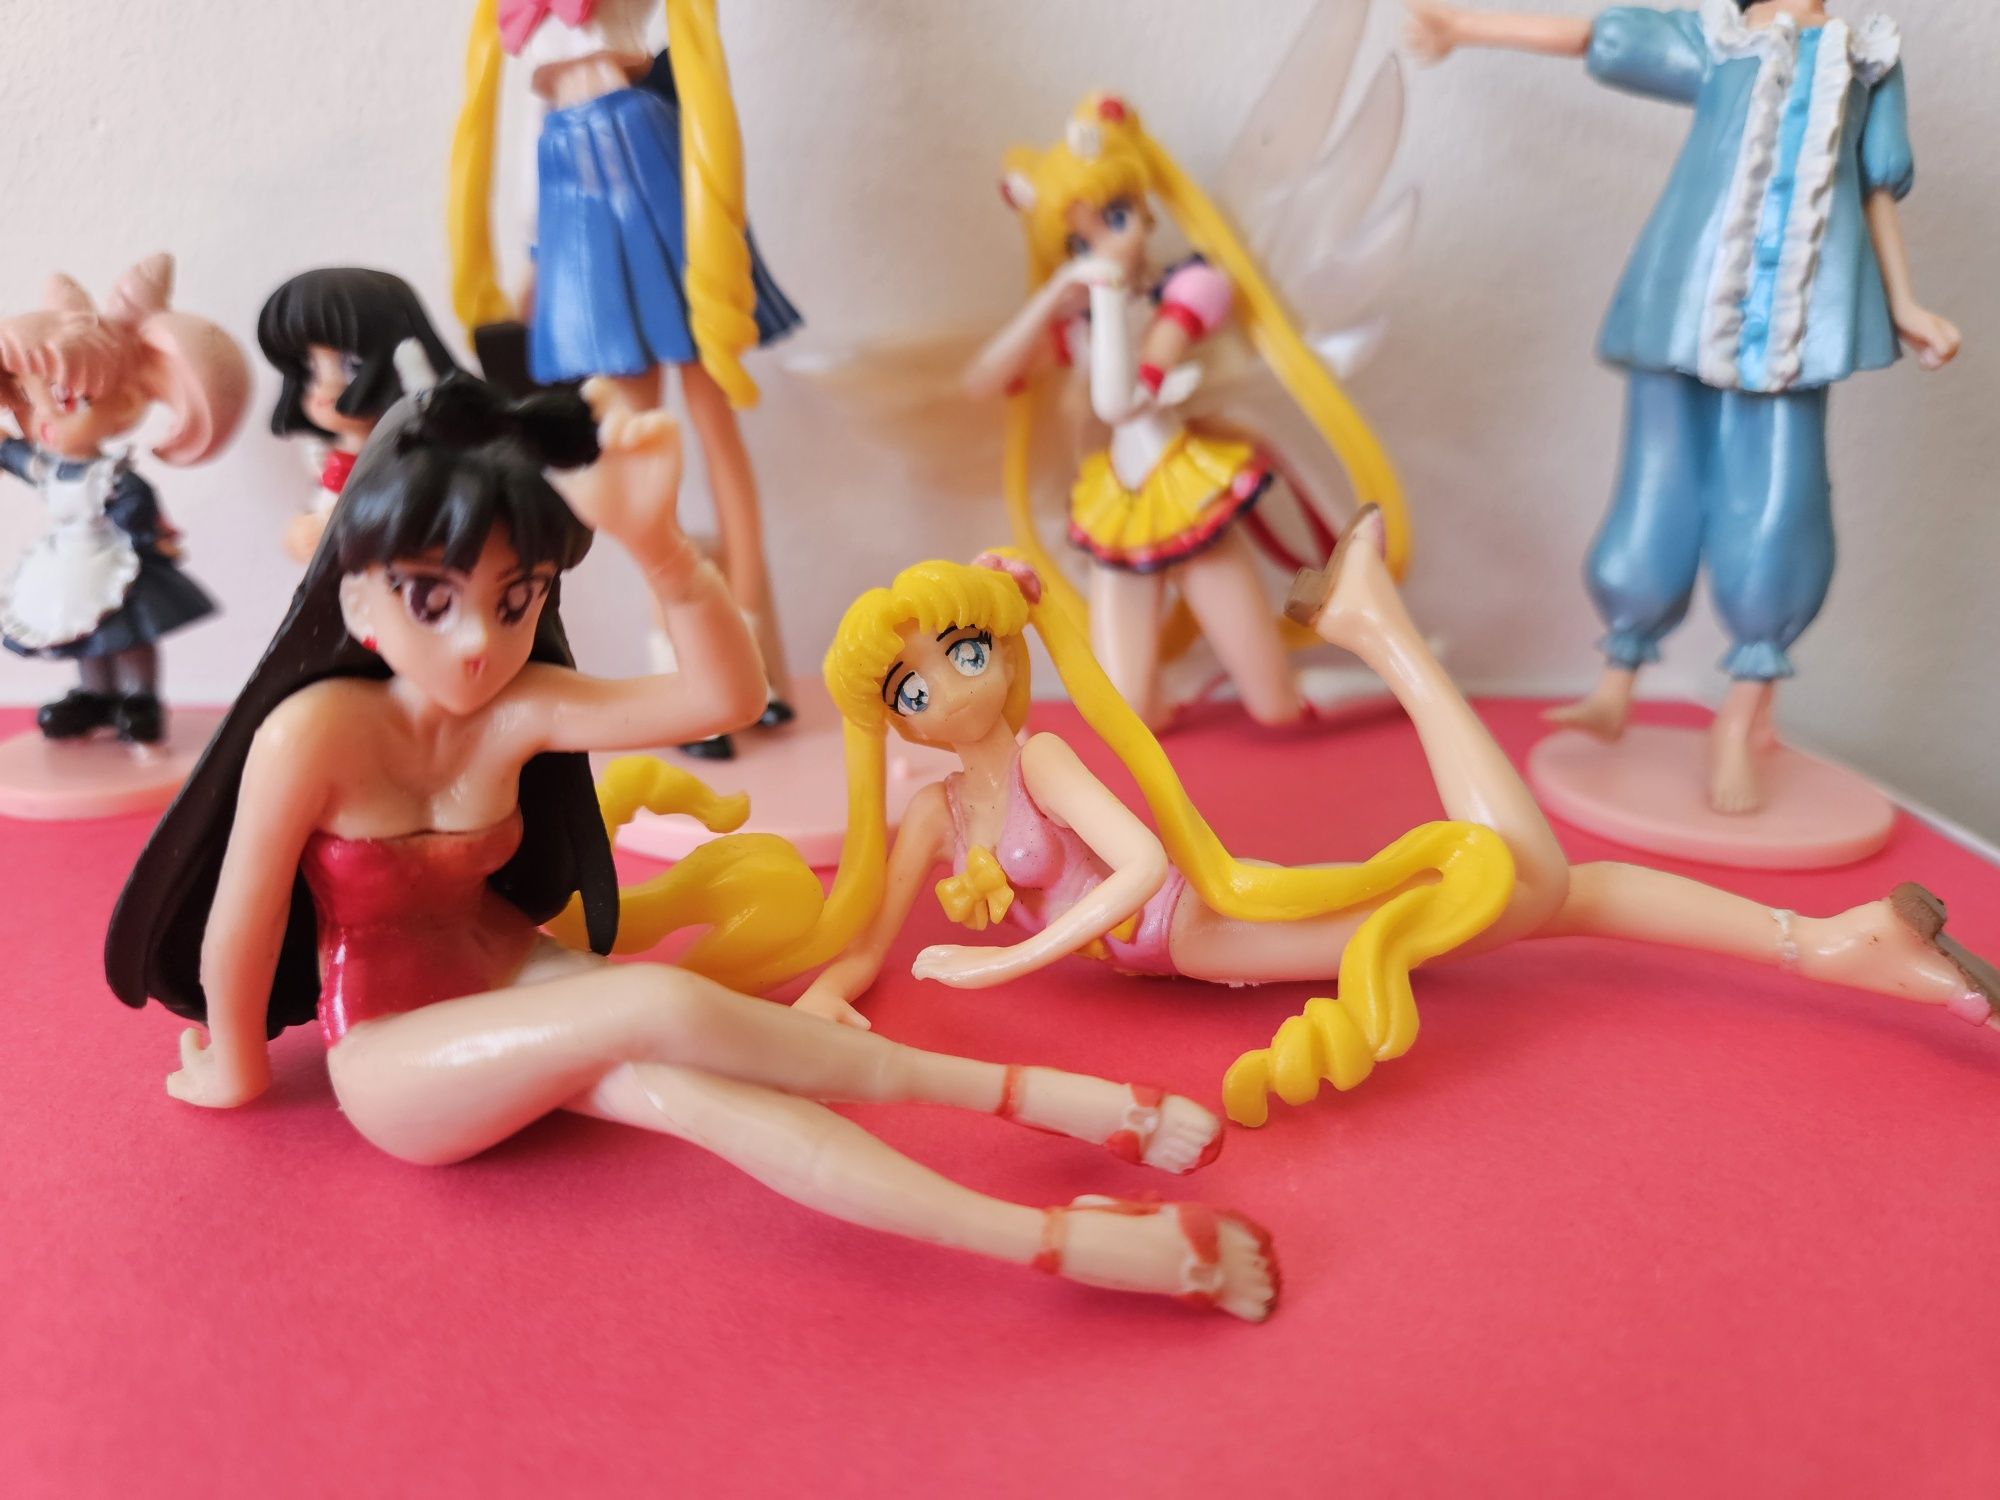 Sailor moon - 7 figuras 3-9cm